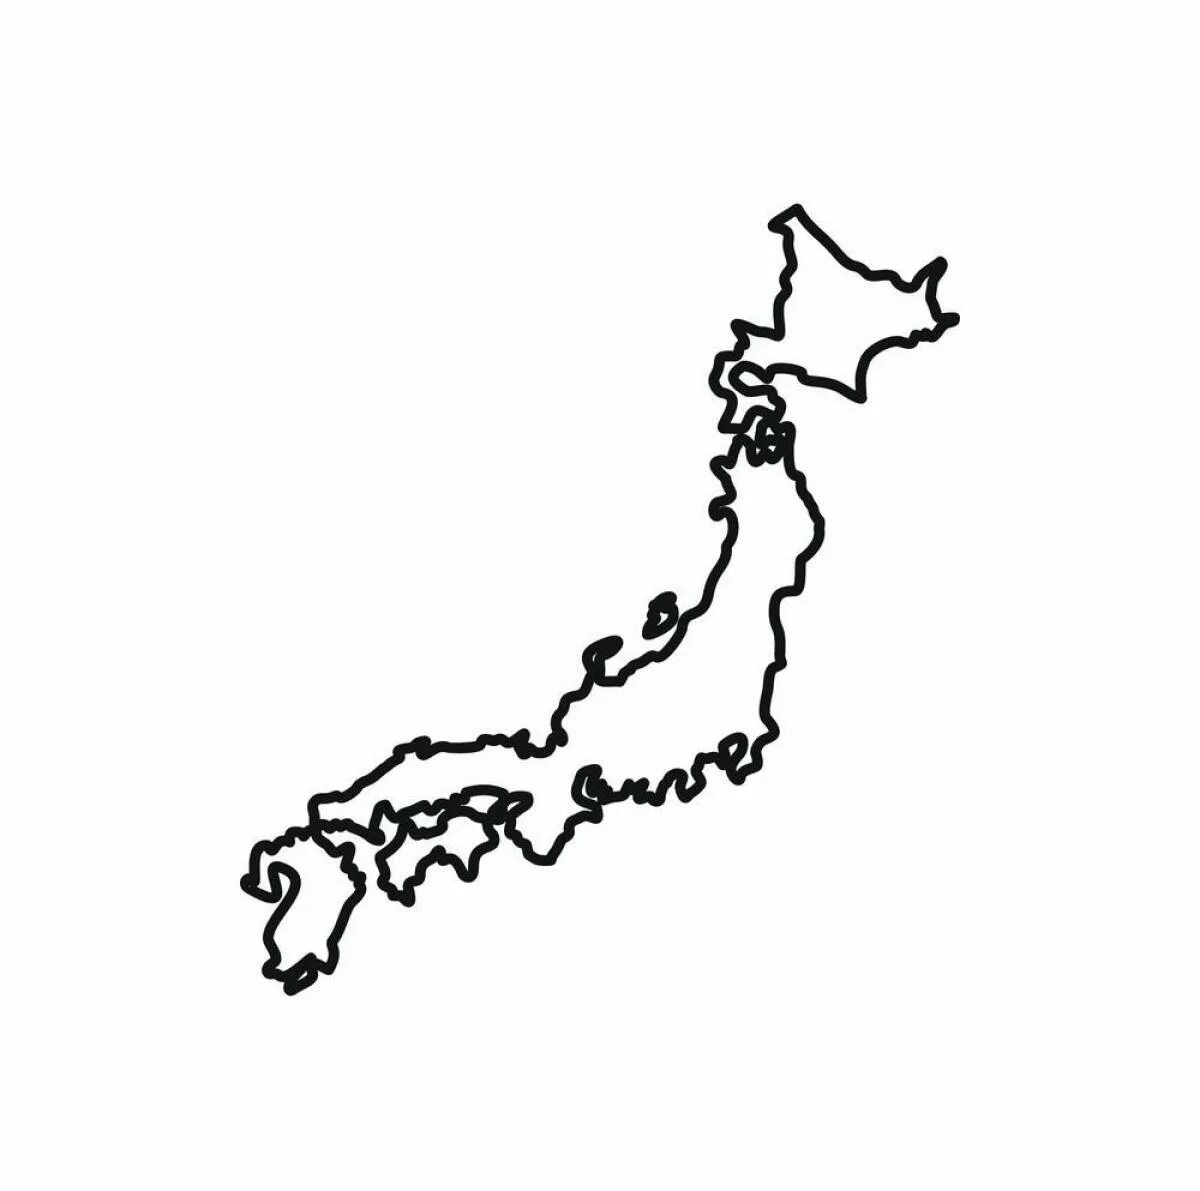 Япония на карте. Пустая карта Японии. Очертания Японии на карте. Контур Японии. Карта японии рисунок